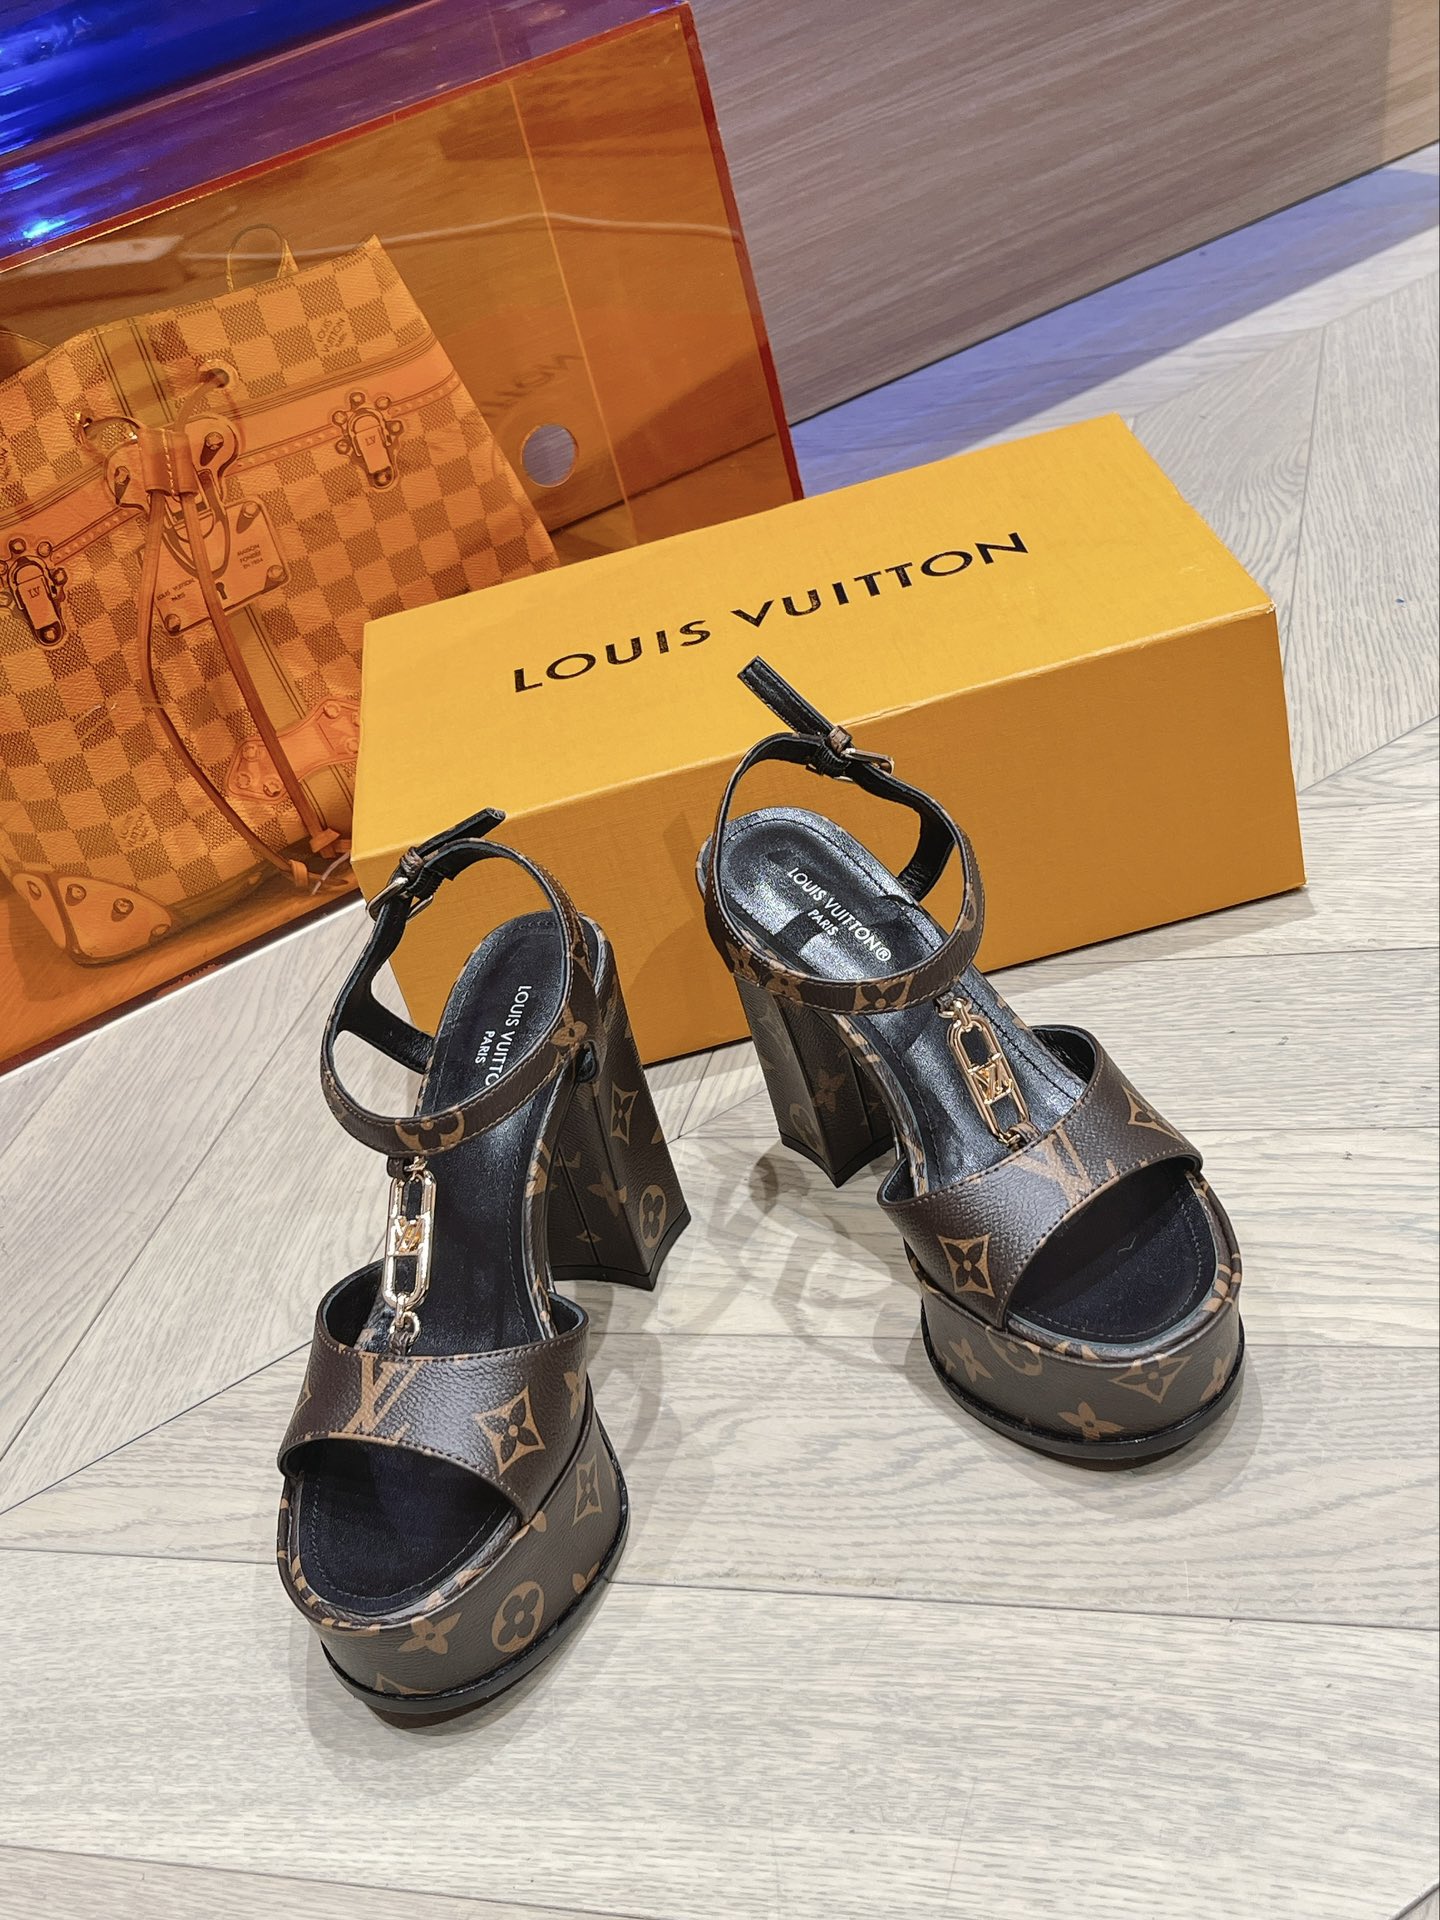 Louis Vuitton Shoes Sandals Goat Skin Sheepskin Silk